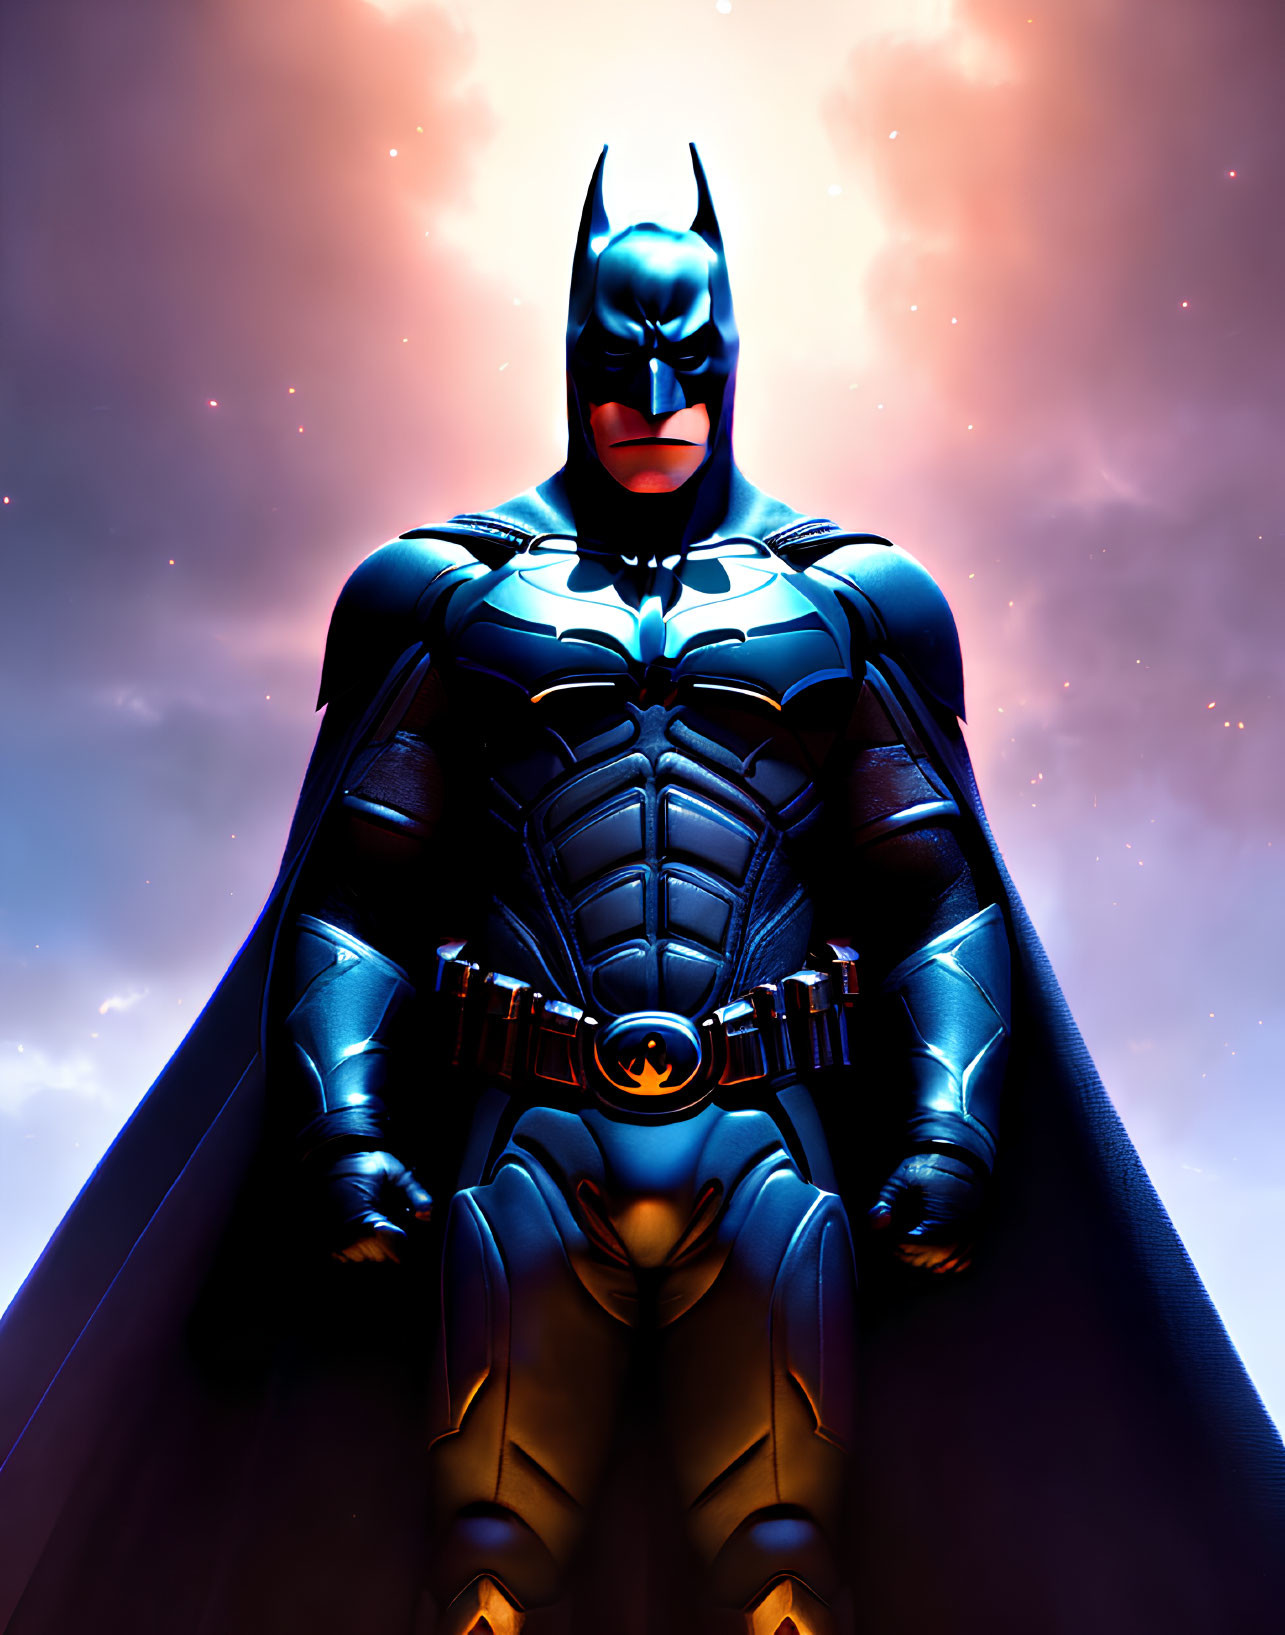 Batman Costume Figure Against Dramatic Sky